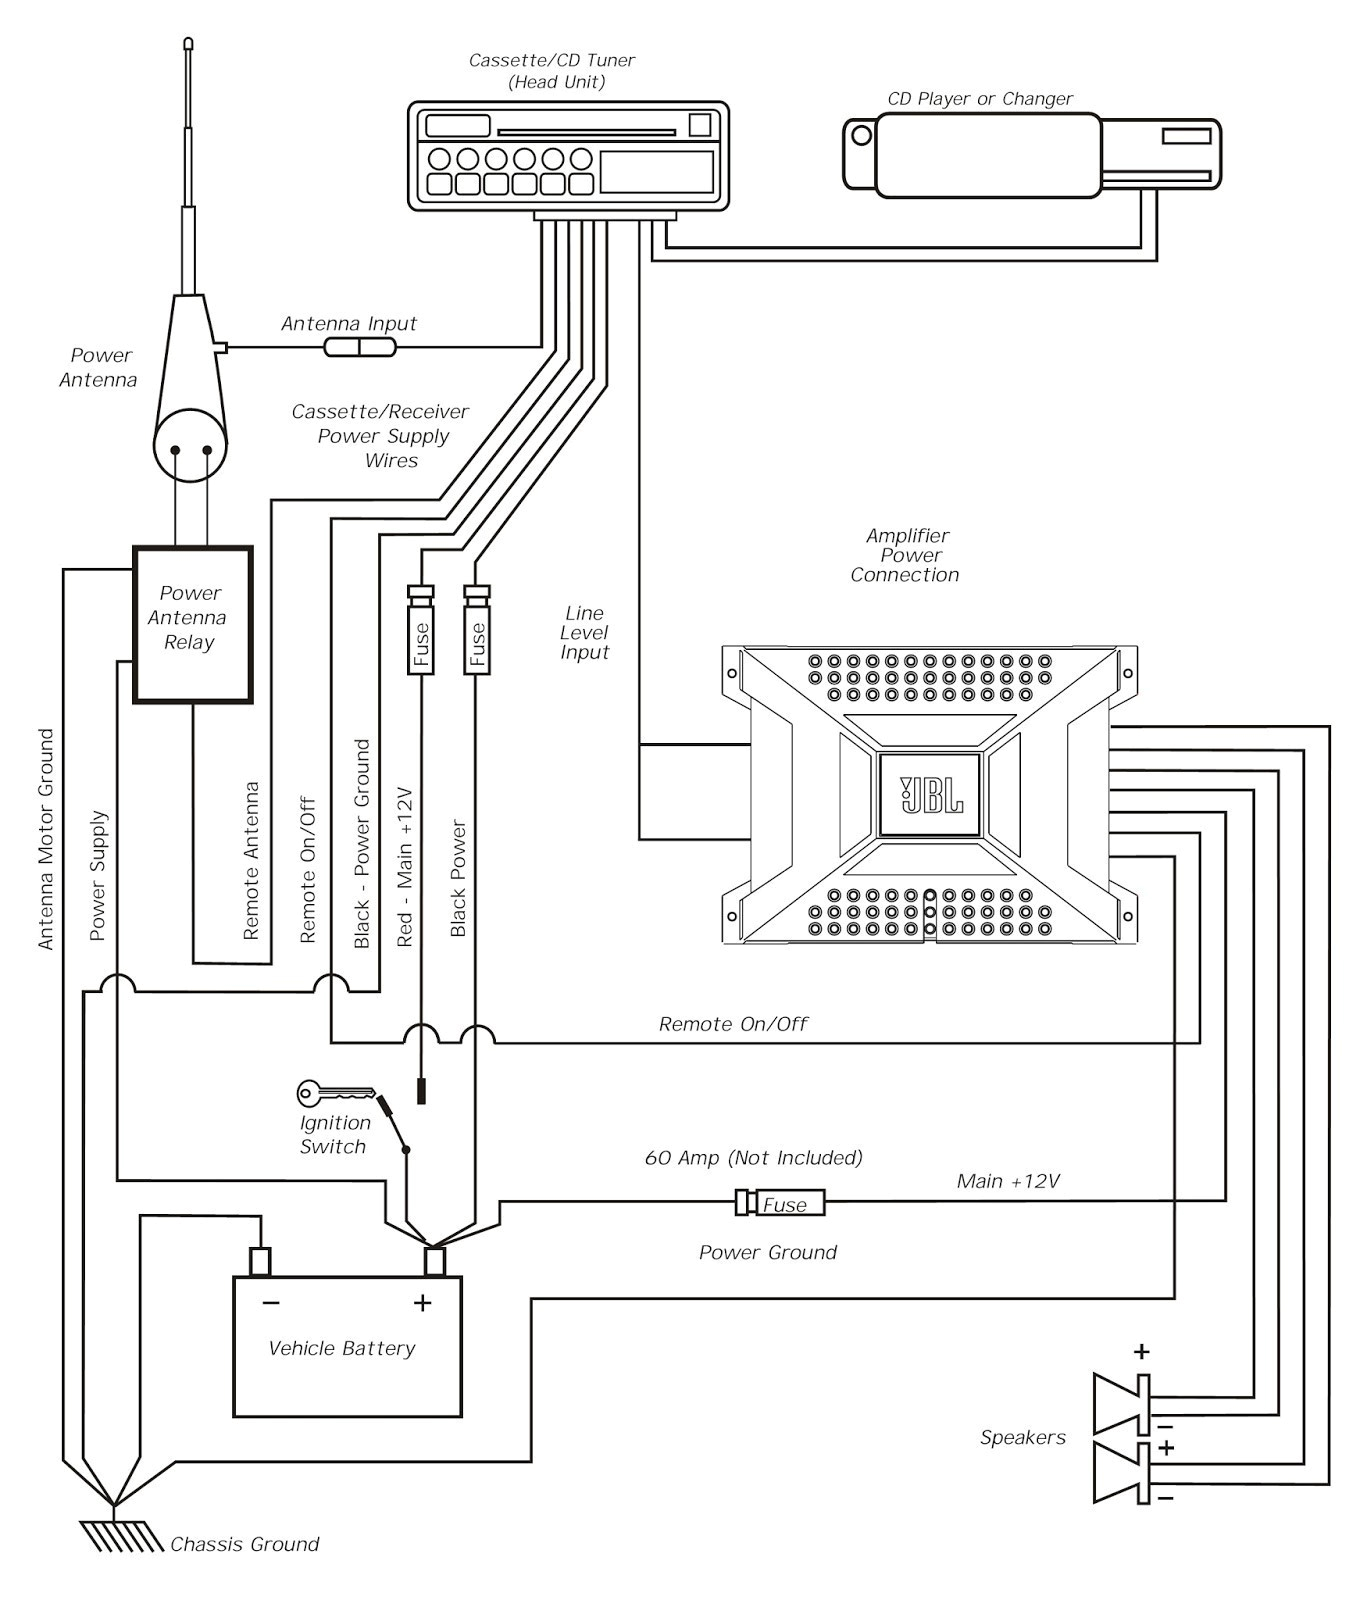 wiring diagram garage supply fresh wiring diagram for alpine car stereo best fresh v12 amplifier wiring of wiring diagram garage supply for fresh wiring diagram for garage png